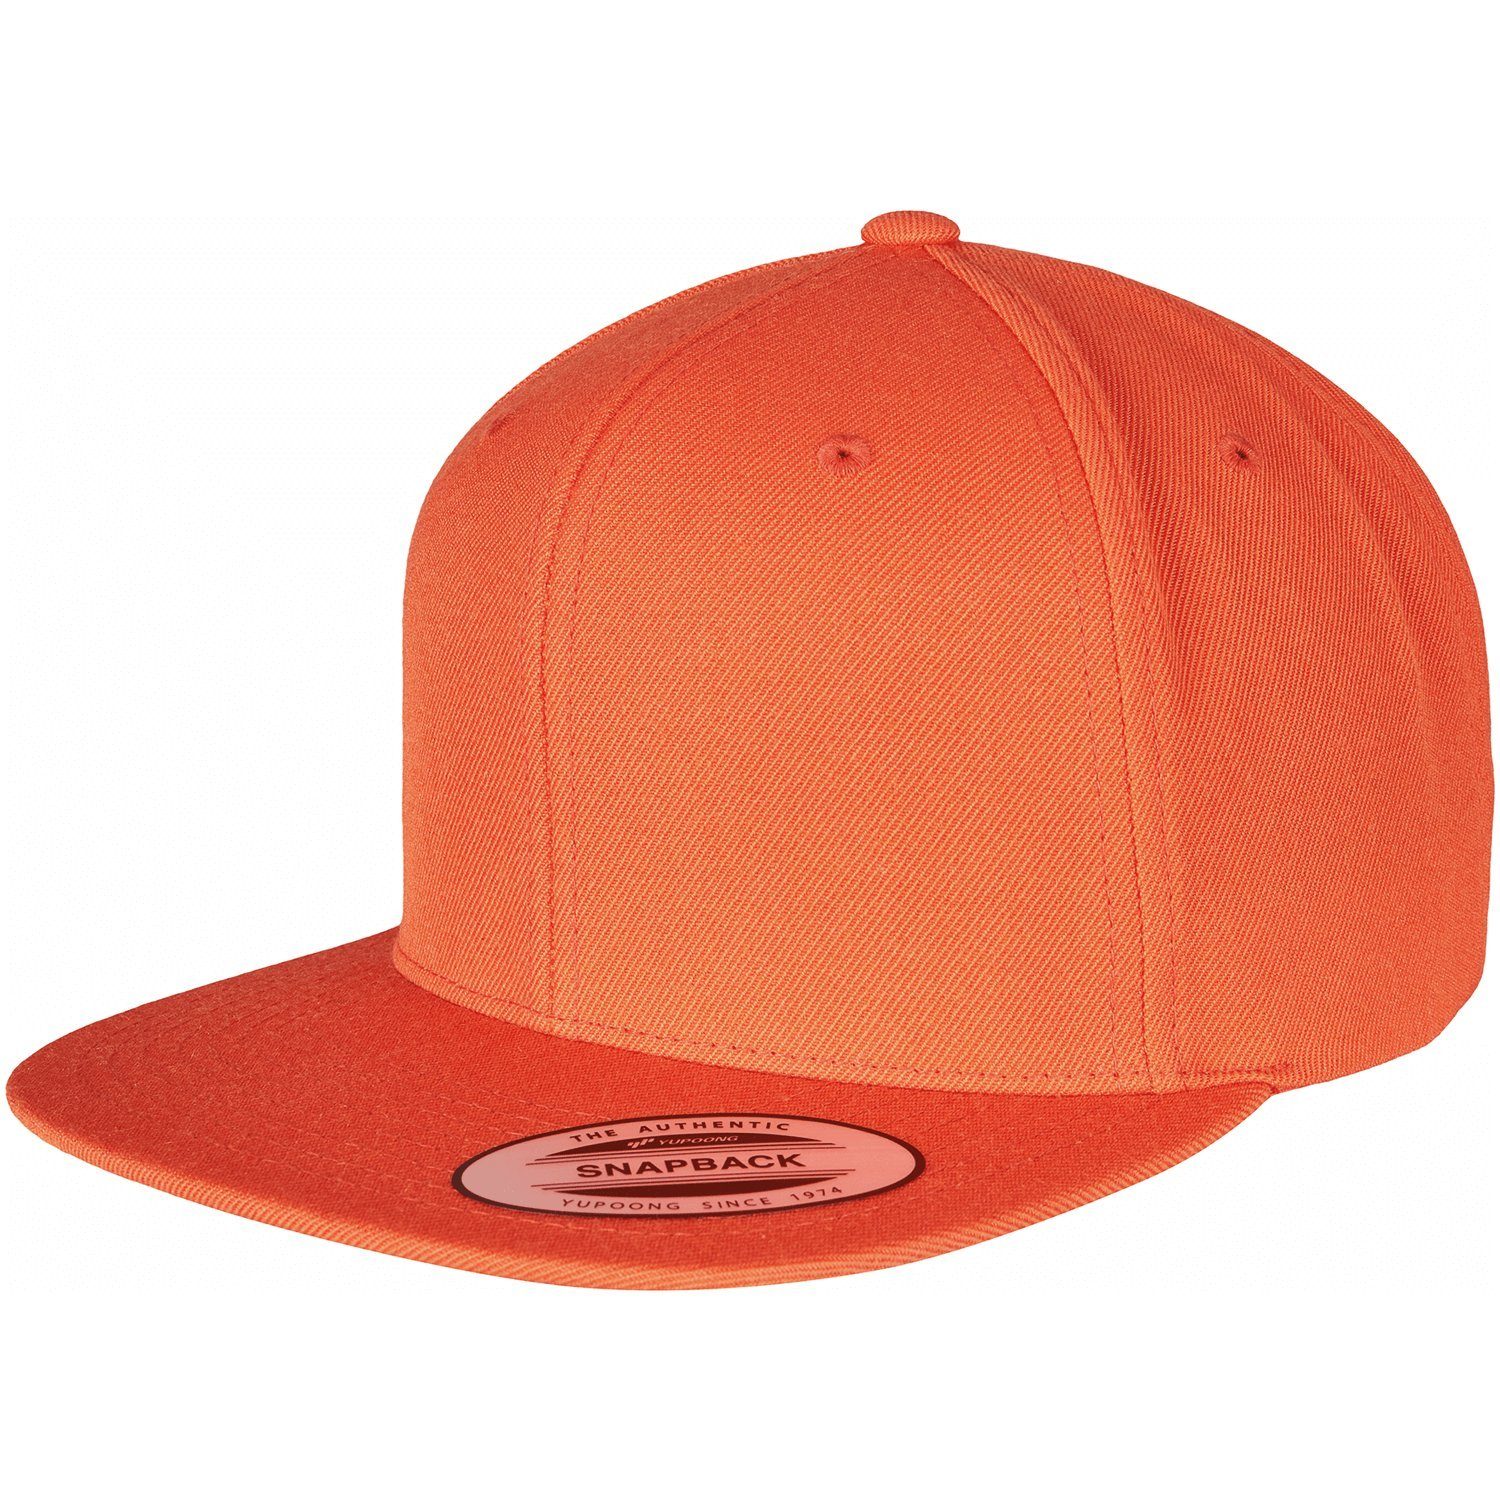 Snapback Classic orange Snapback Cap Flexfit Flexfit Cap